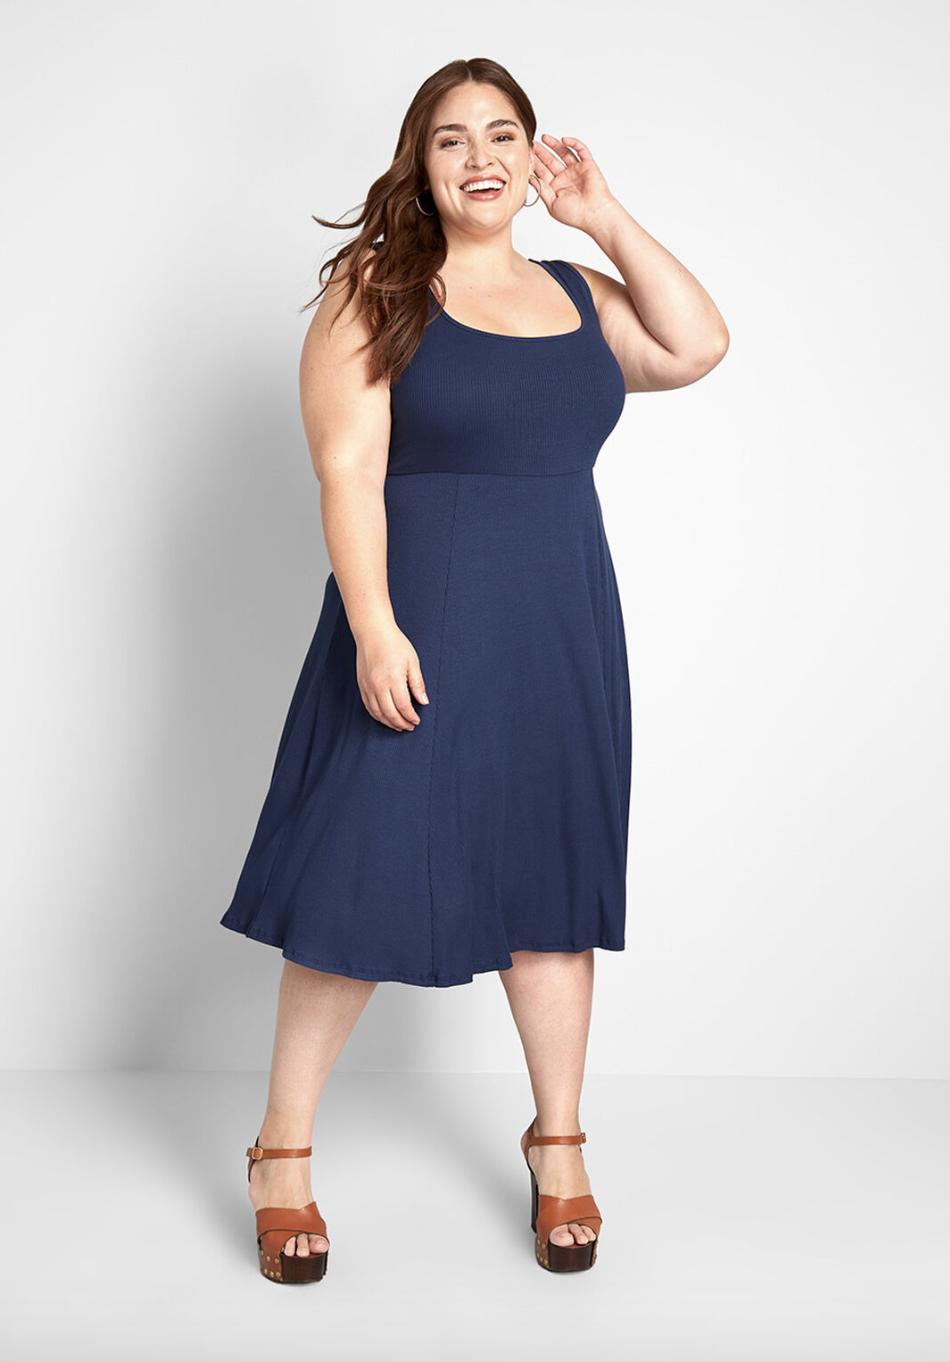 A model in the midi dress in navy blue 